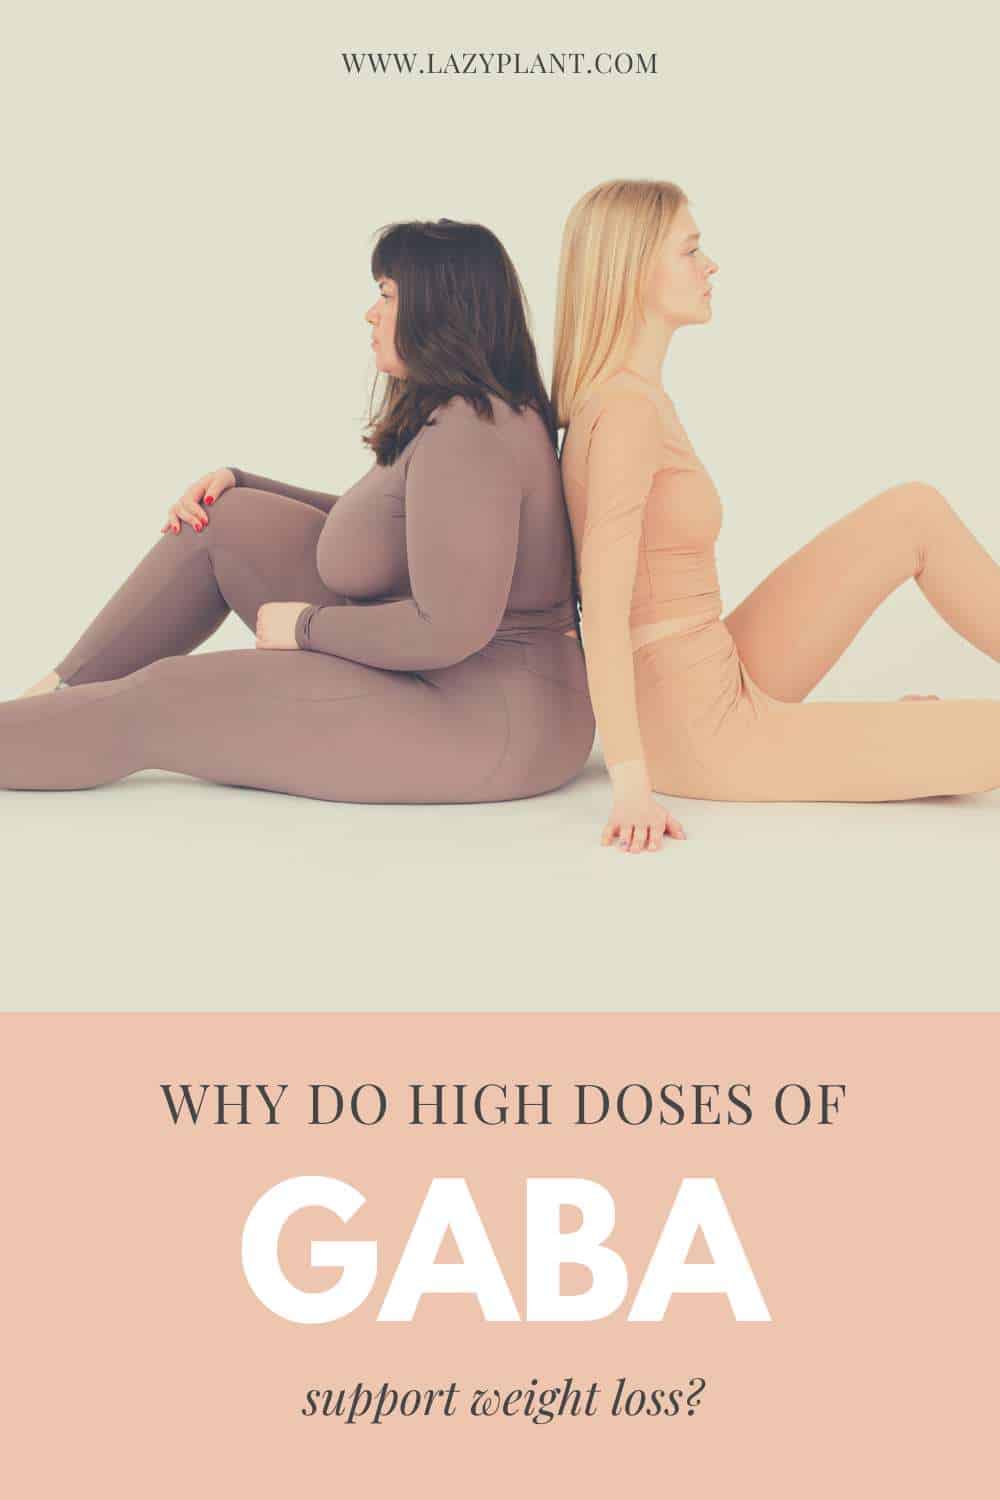 high dosages of GABA enhance weight loss.